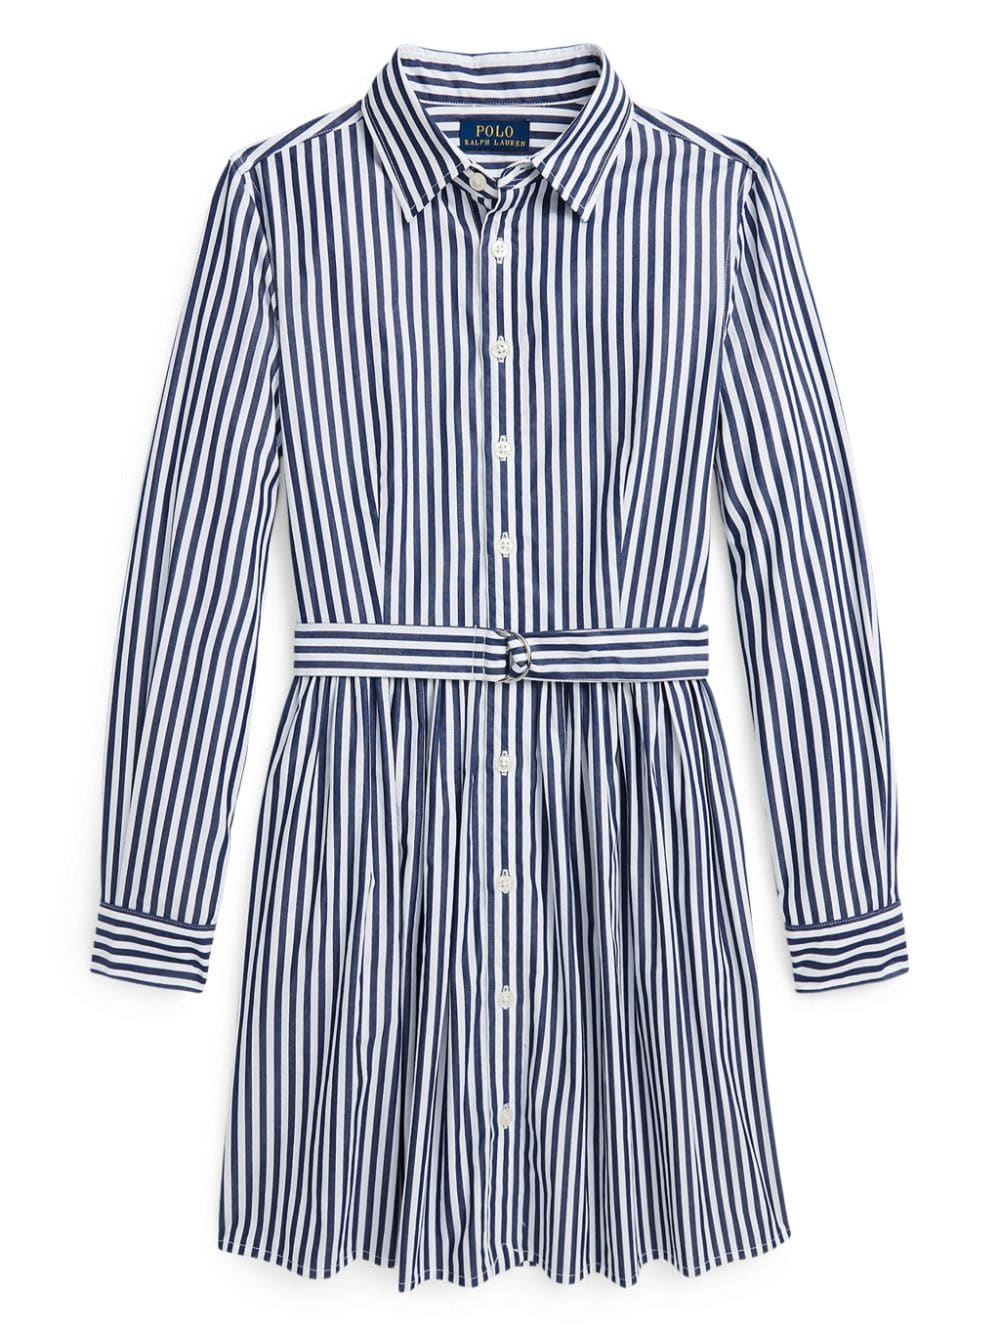 Ralph Lauren Kids striped cotton shirt dress - Blue von Ralph Lauren Kids